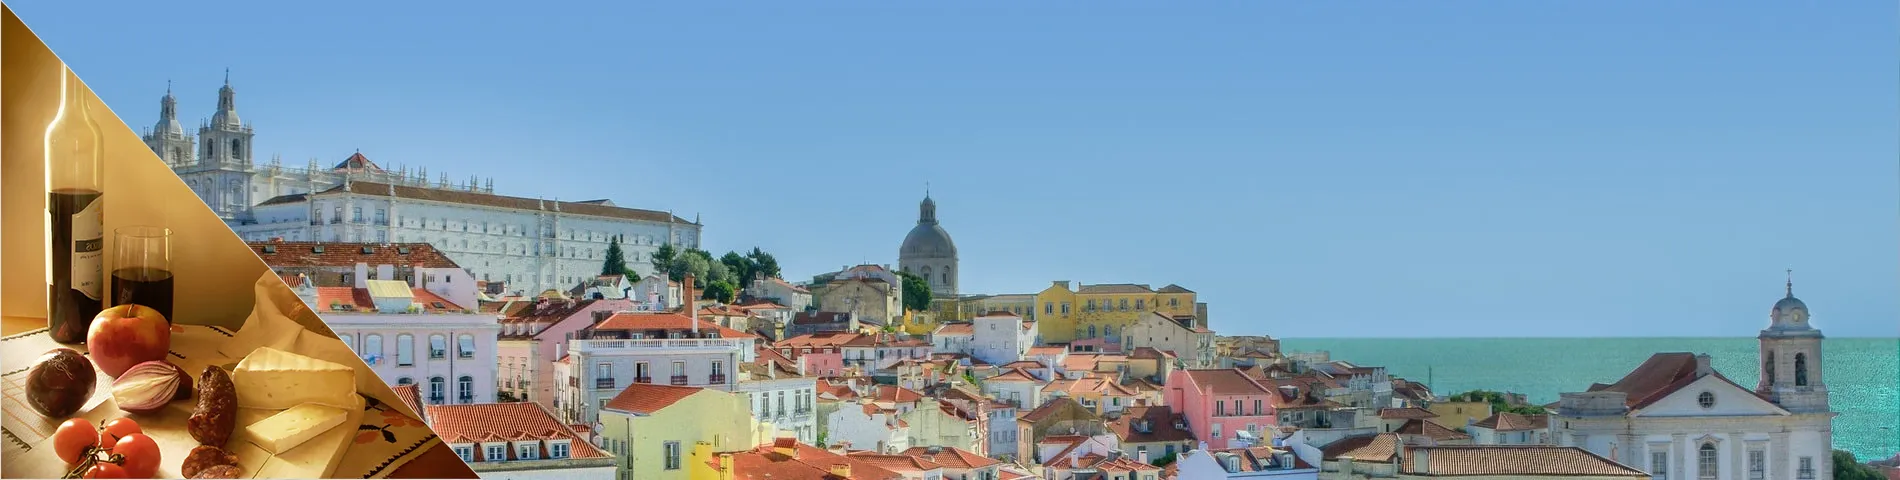 Lisbona - Portoghese & Cultura